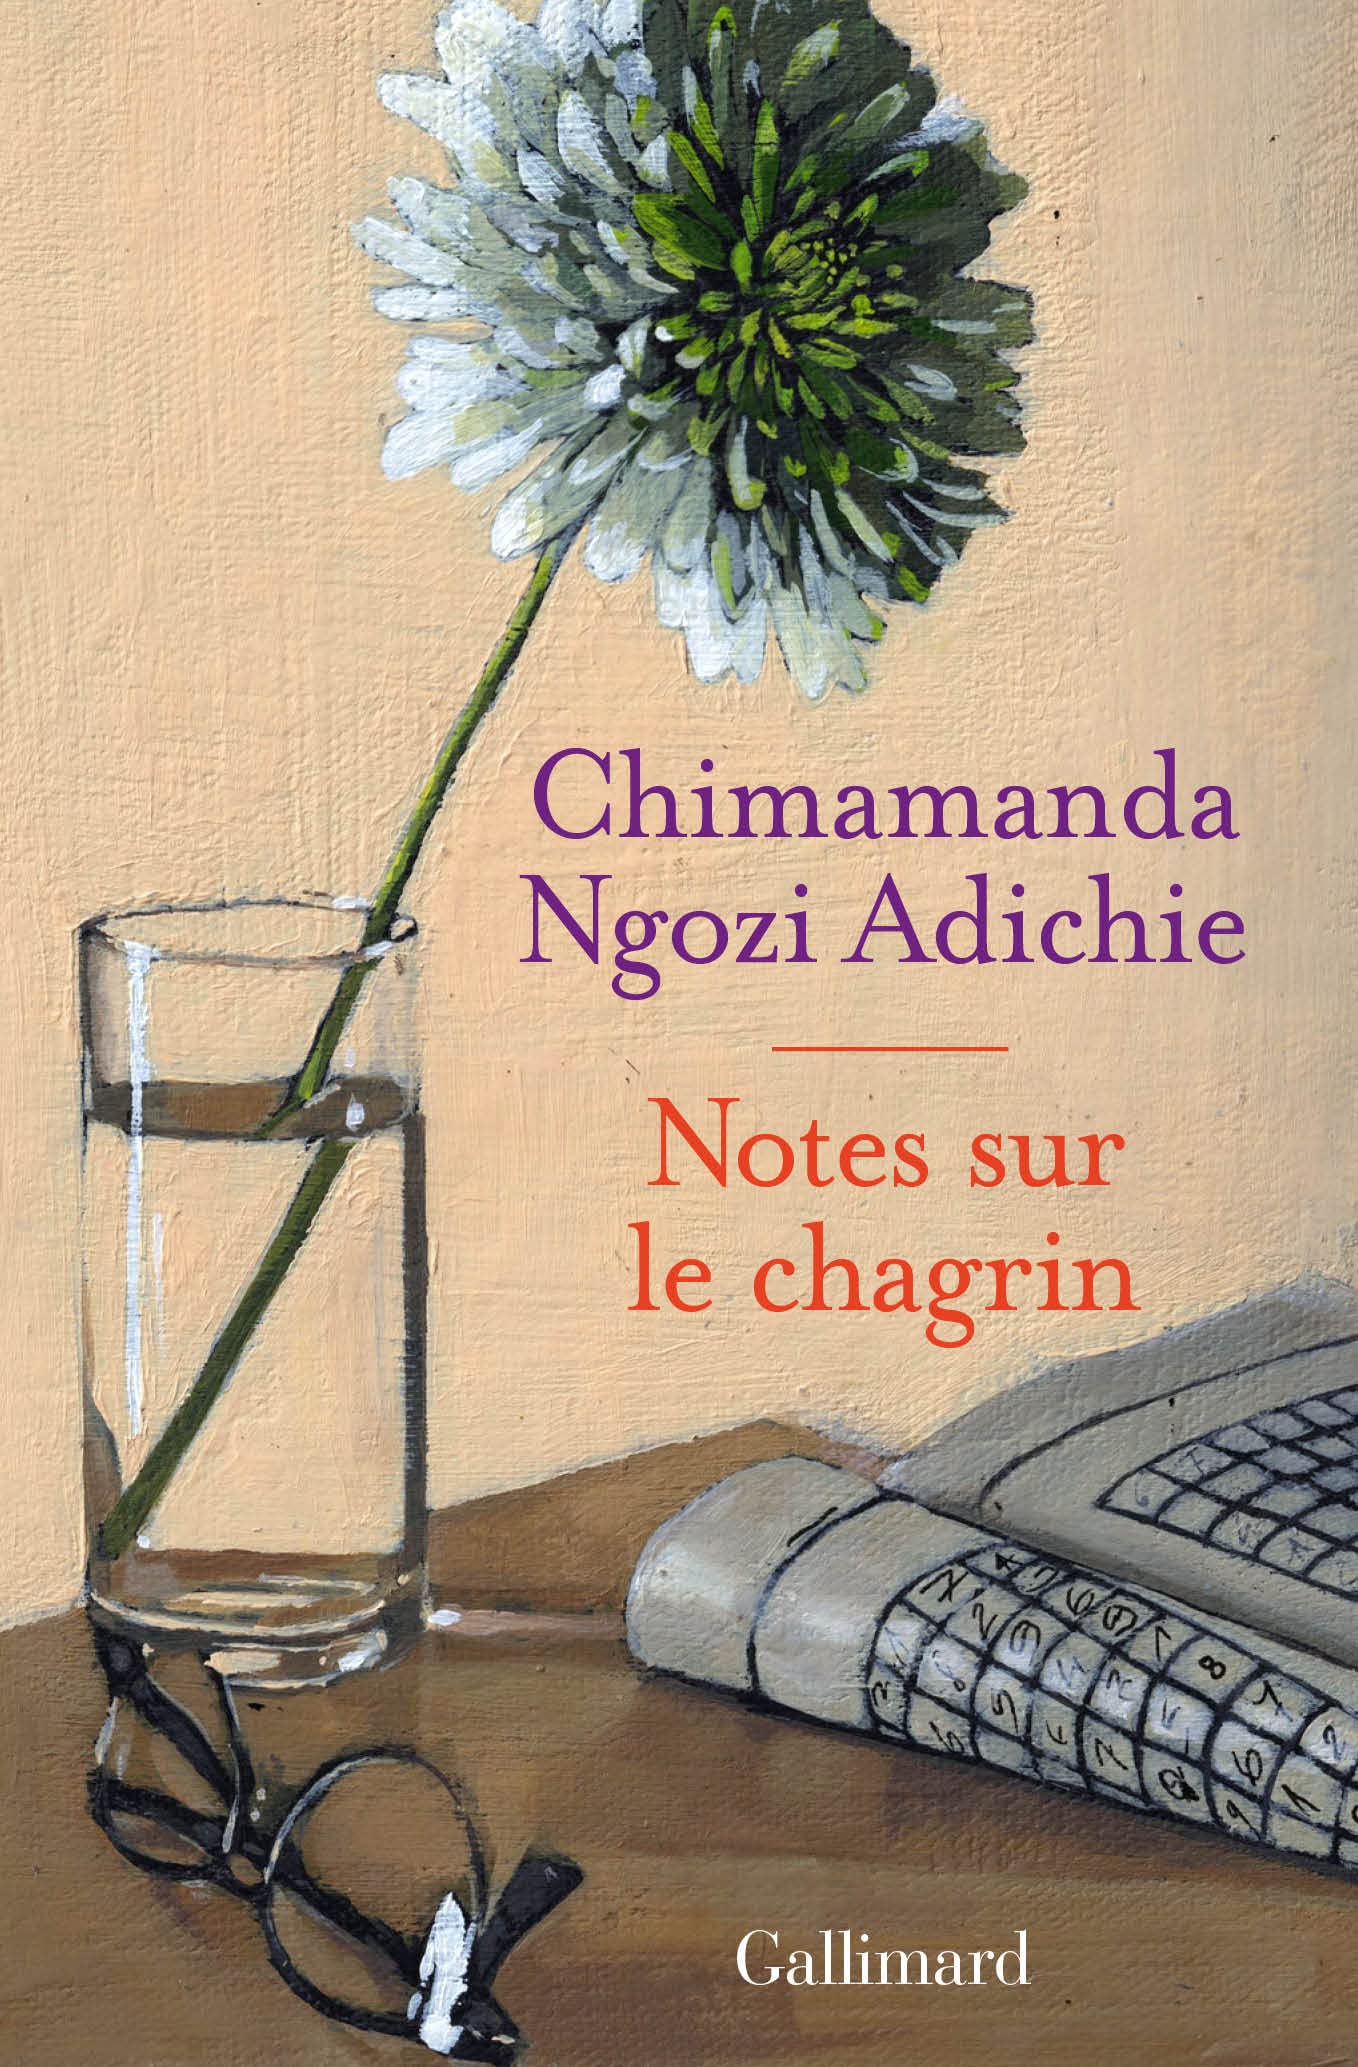 Notes sur le chagrin by Chimamanda Ngozi Adichie